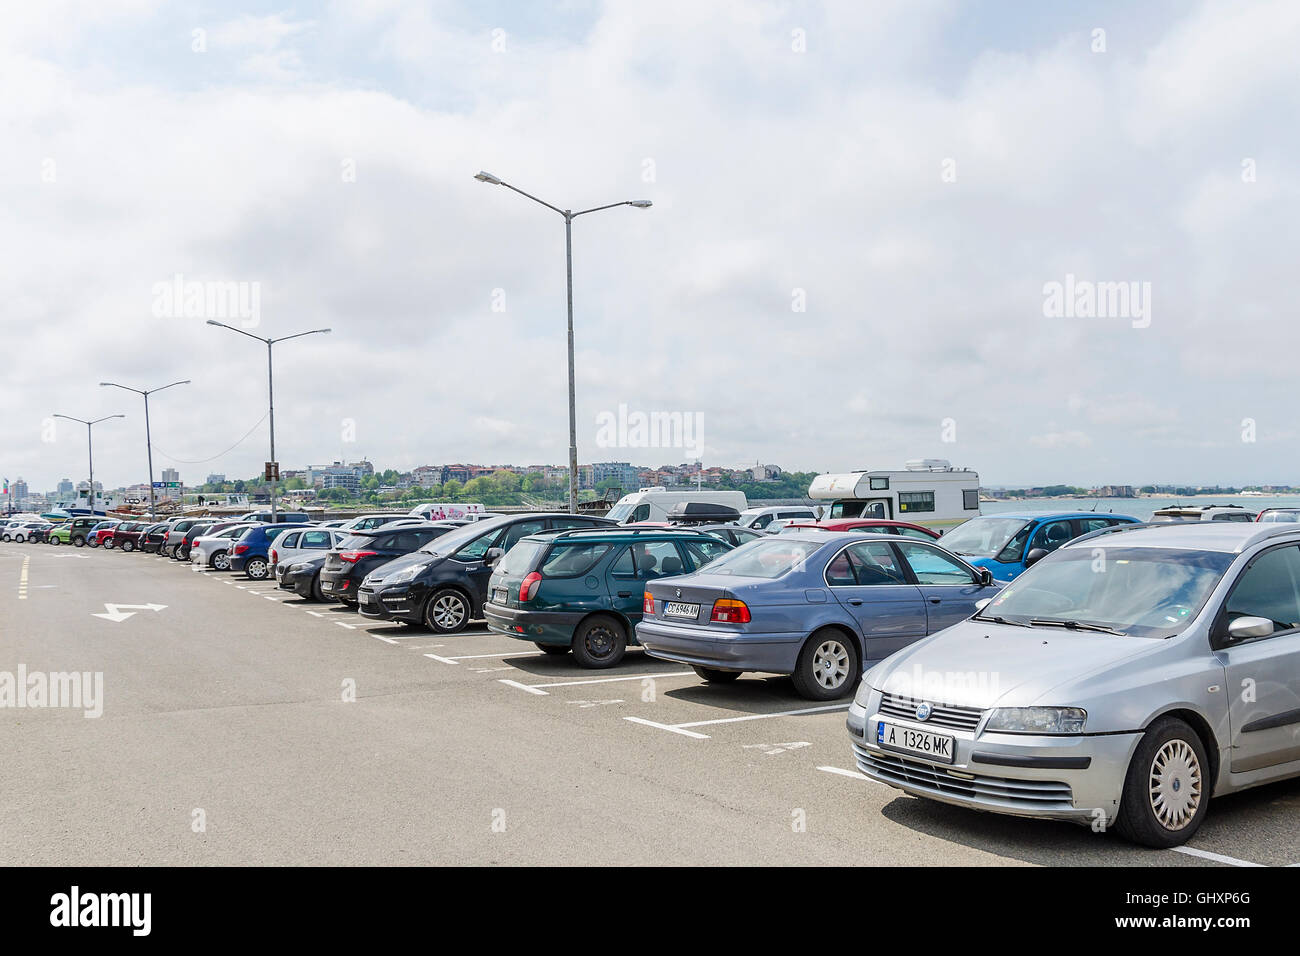 NESSEBAR, SUNNY BEACH, BULGARIA - MAY 8: Car parking in the city, on May 8, 2016 in Nessebar, Sunny Beach, Bulgaria. Stock Photo